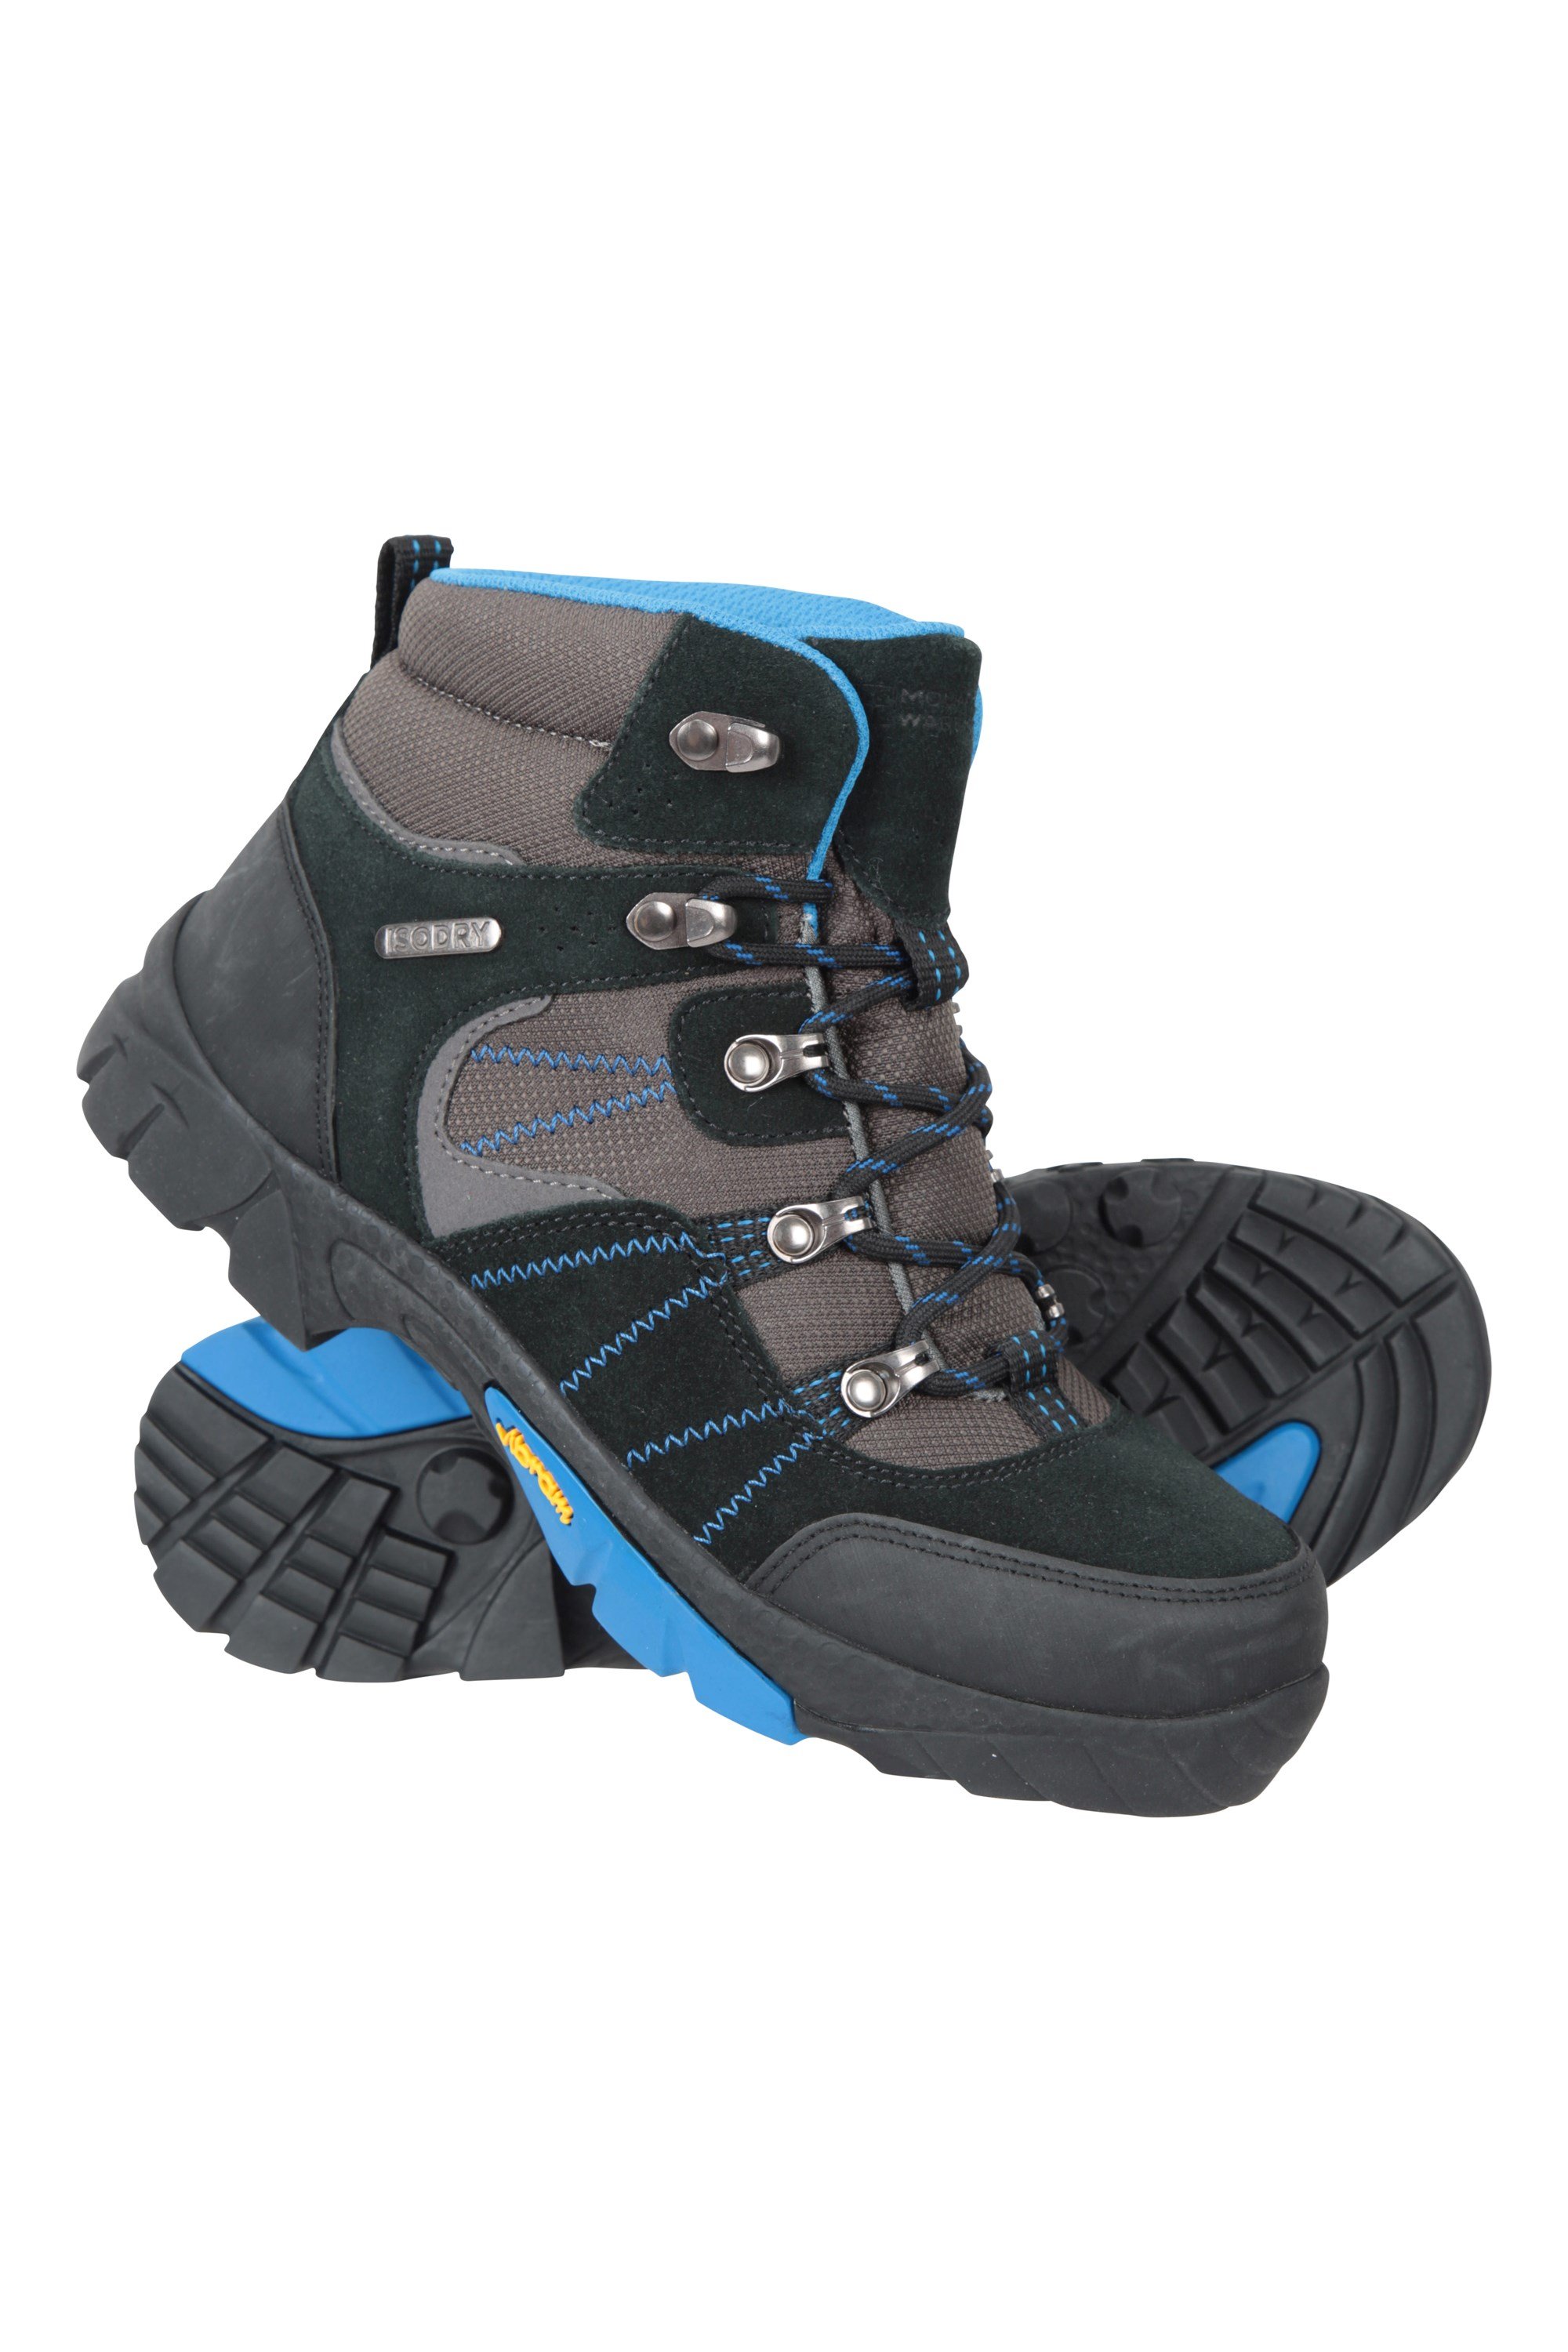 Edinburgh Vibram Kids Waterproof Walking Boots - Blue